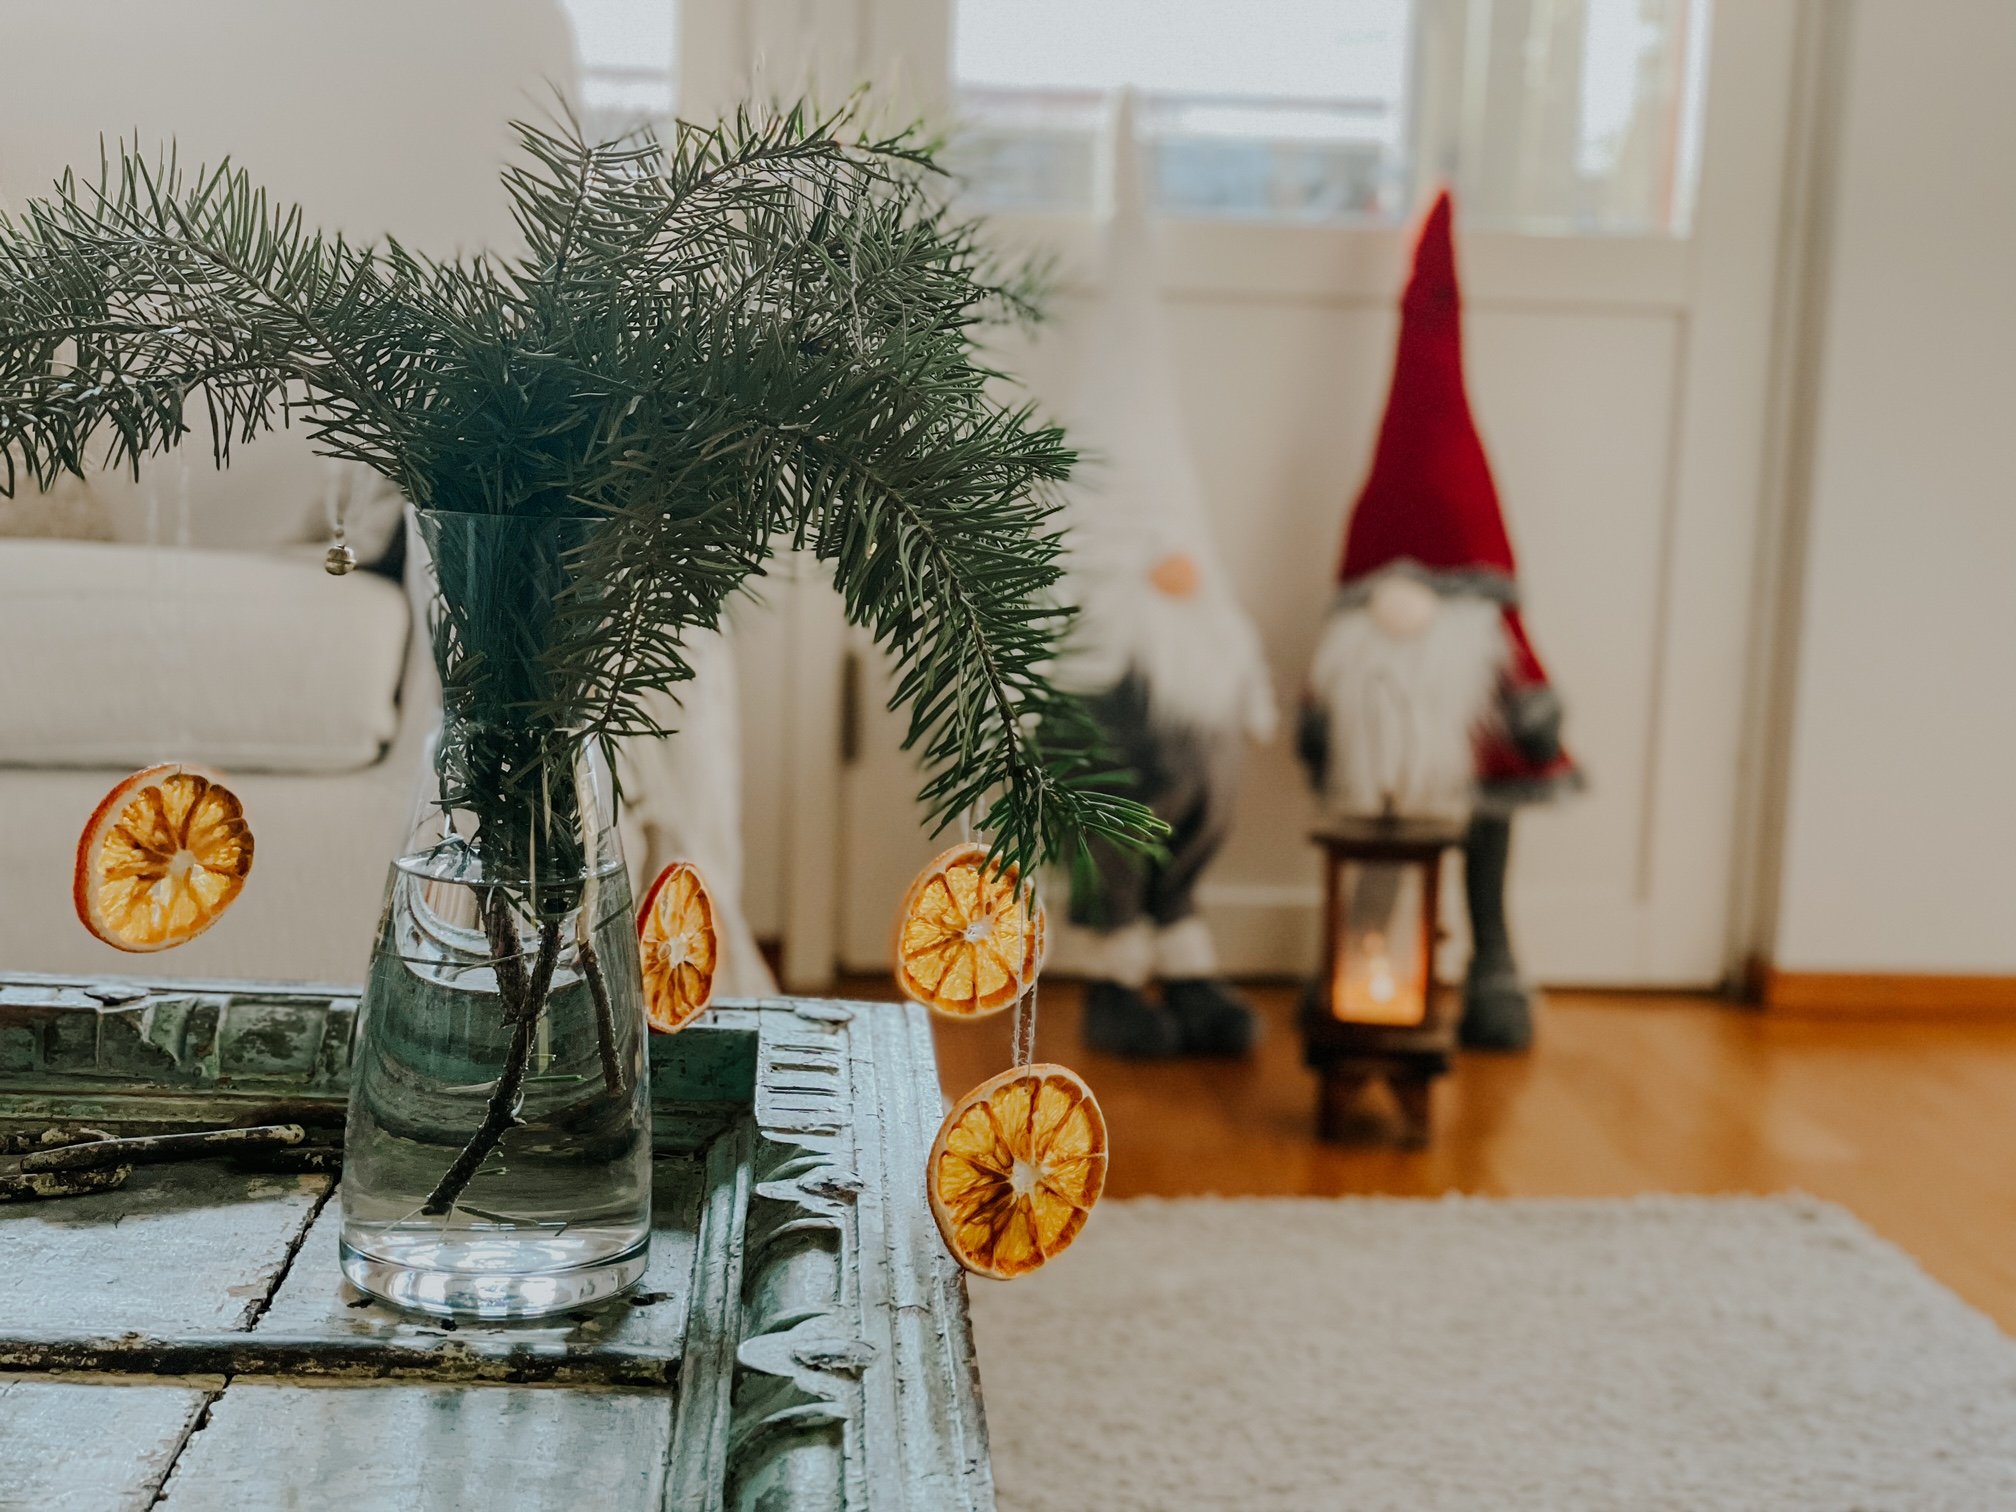 Scandinavian and Nordic Christmas: Traditions and Food